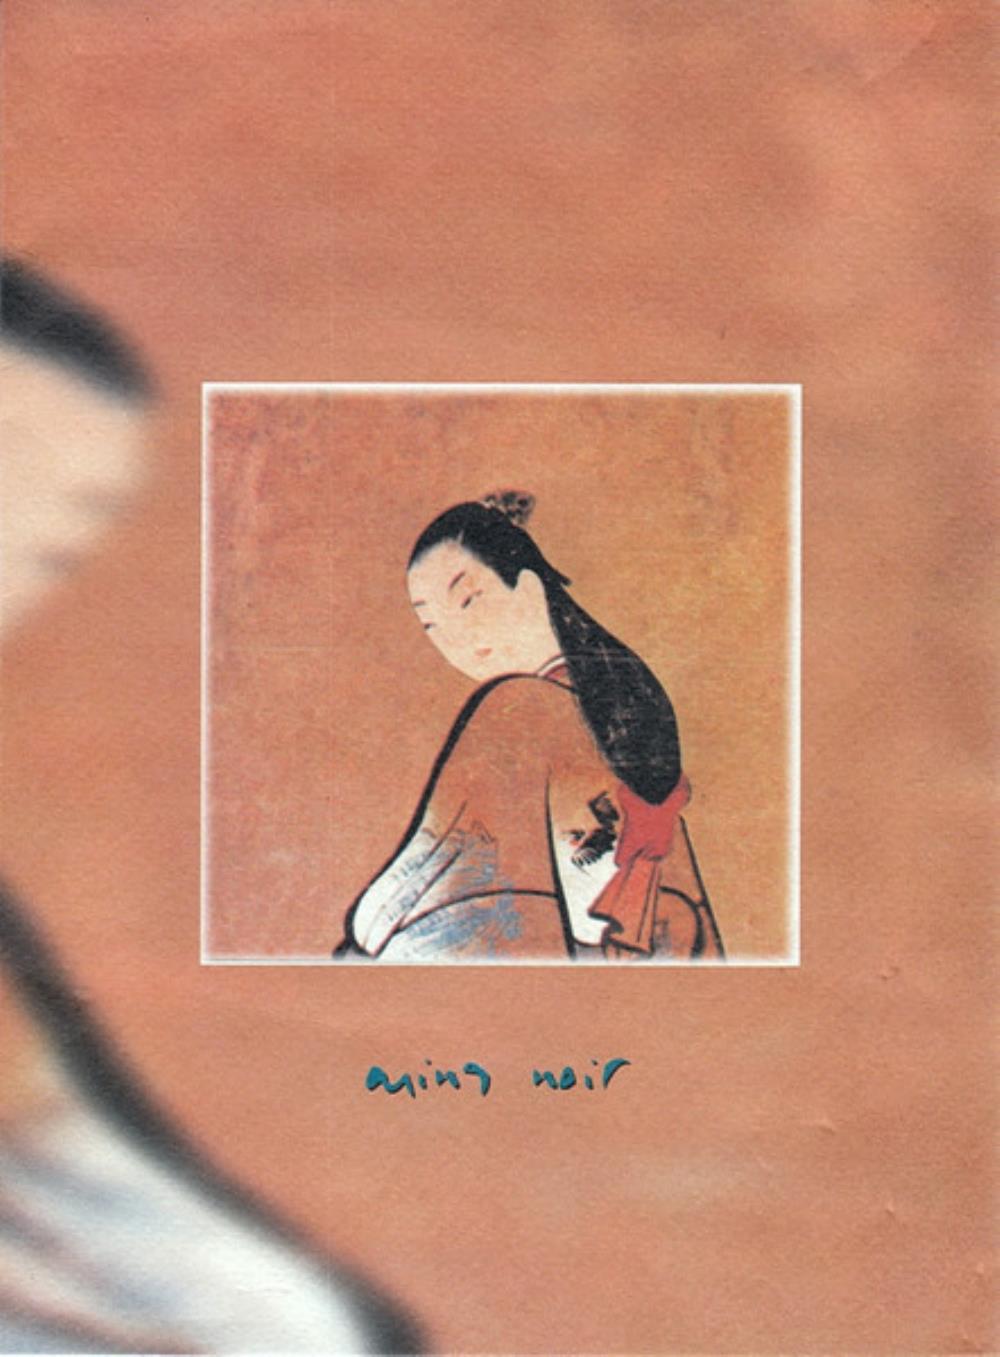 Klaus Wiese Ming Noir album cover